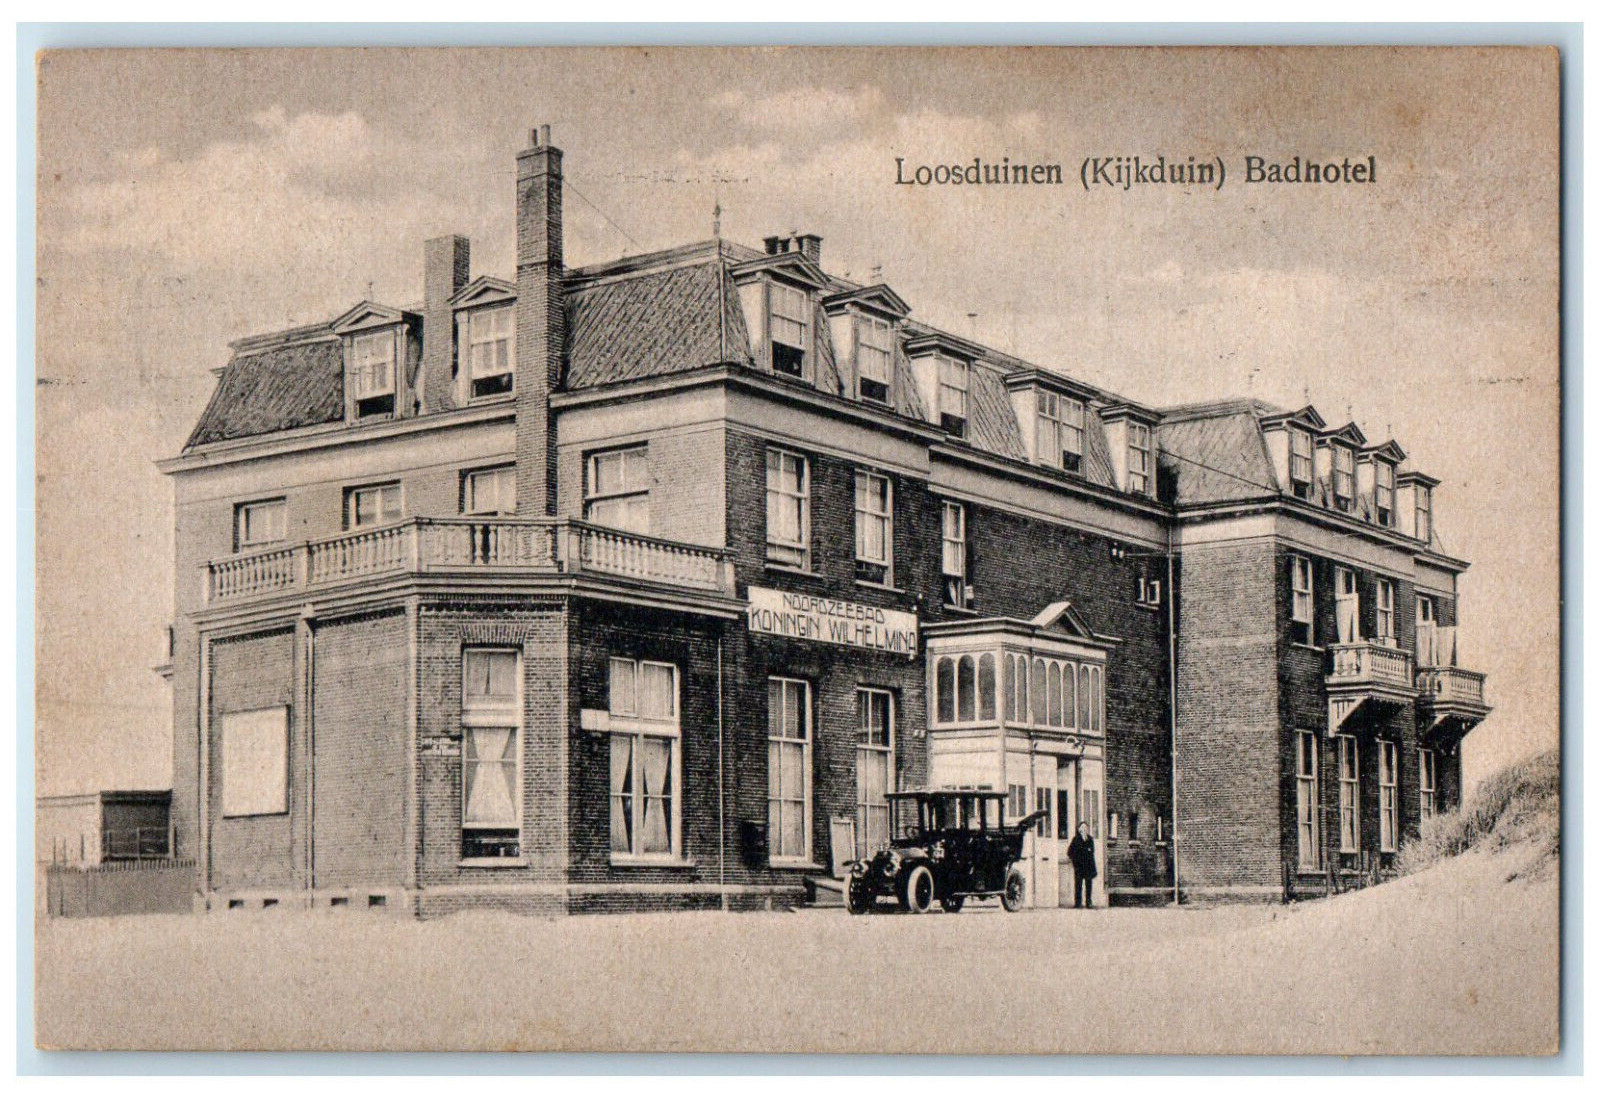 1921 Loosduinen (Kijkduin) Badhotel Netherlands Posted Antique Postcard